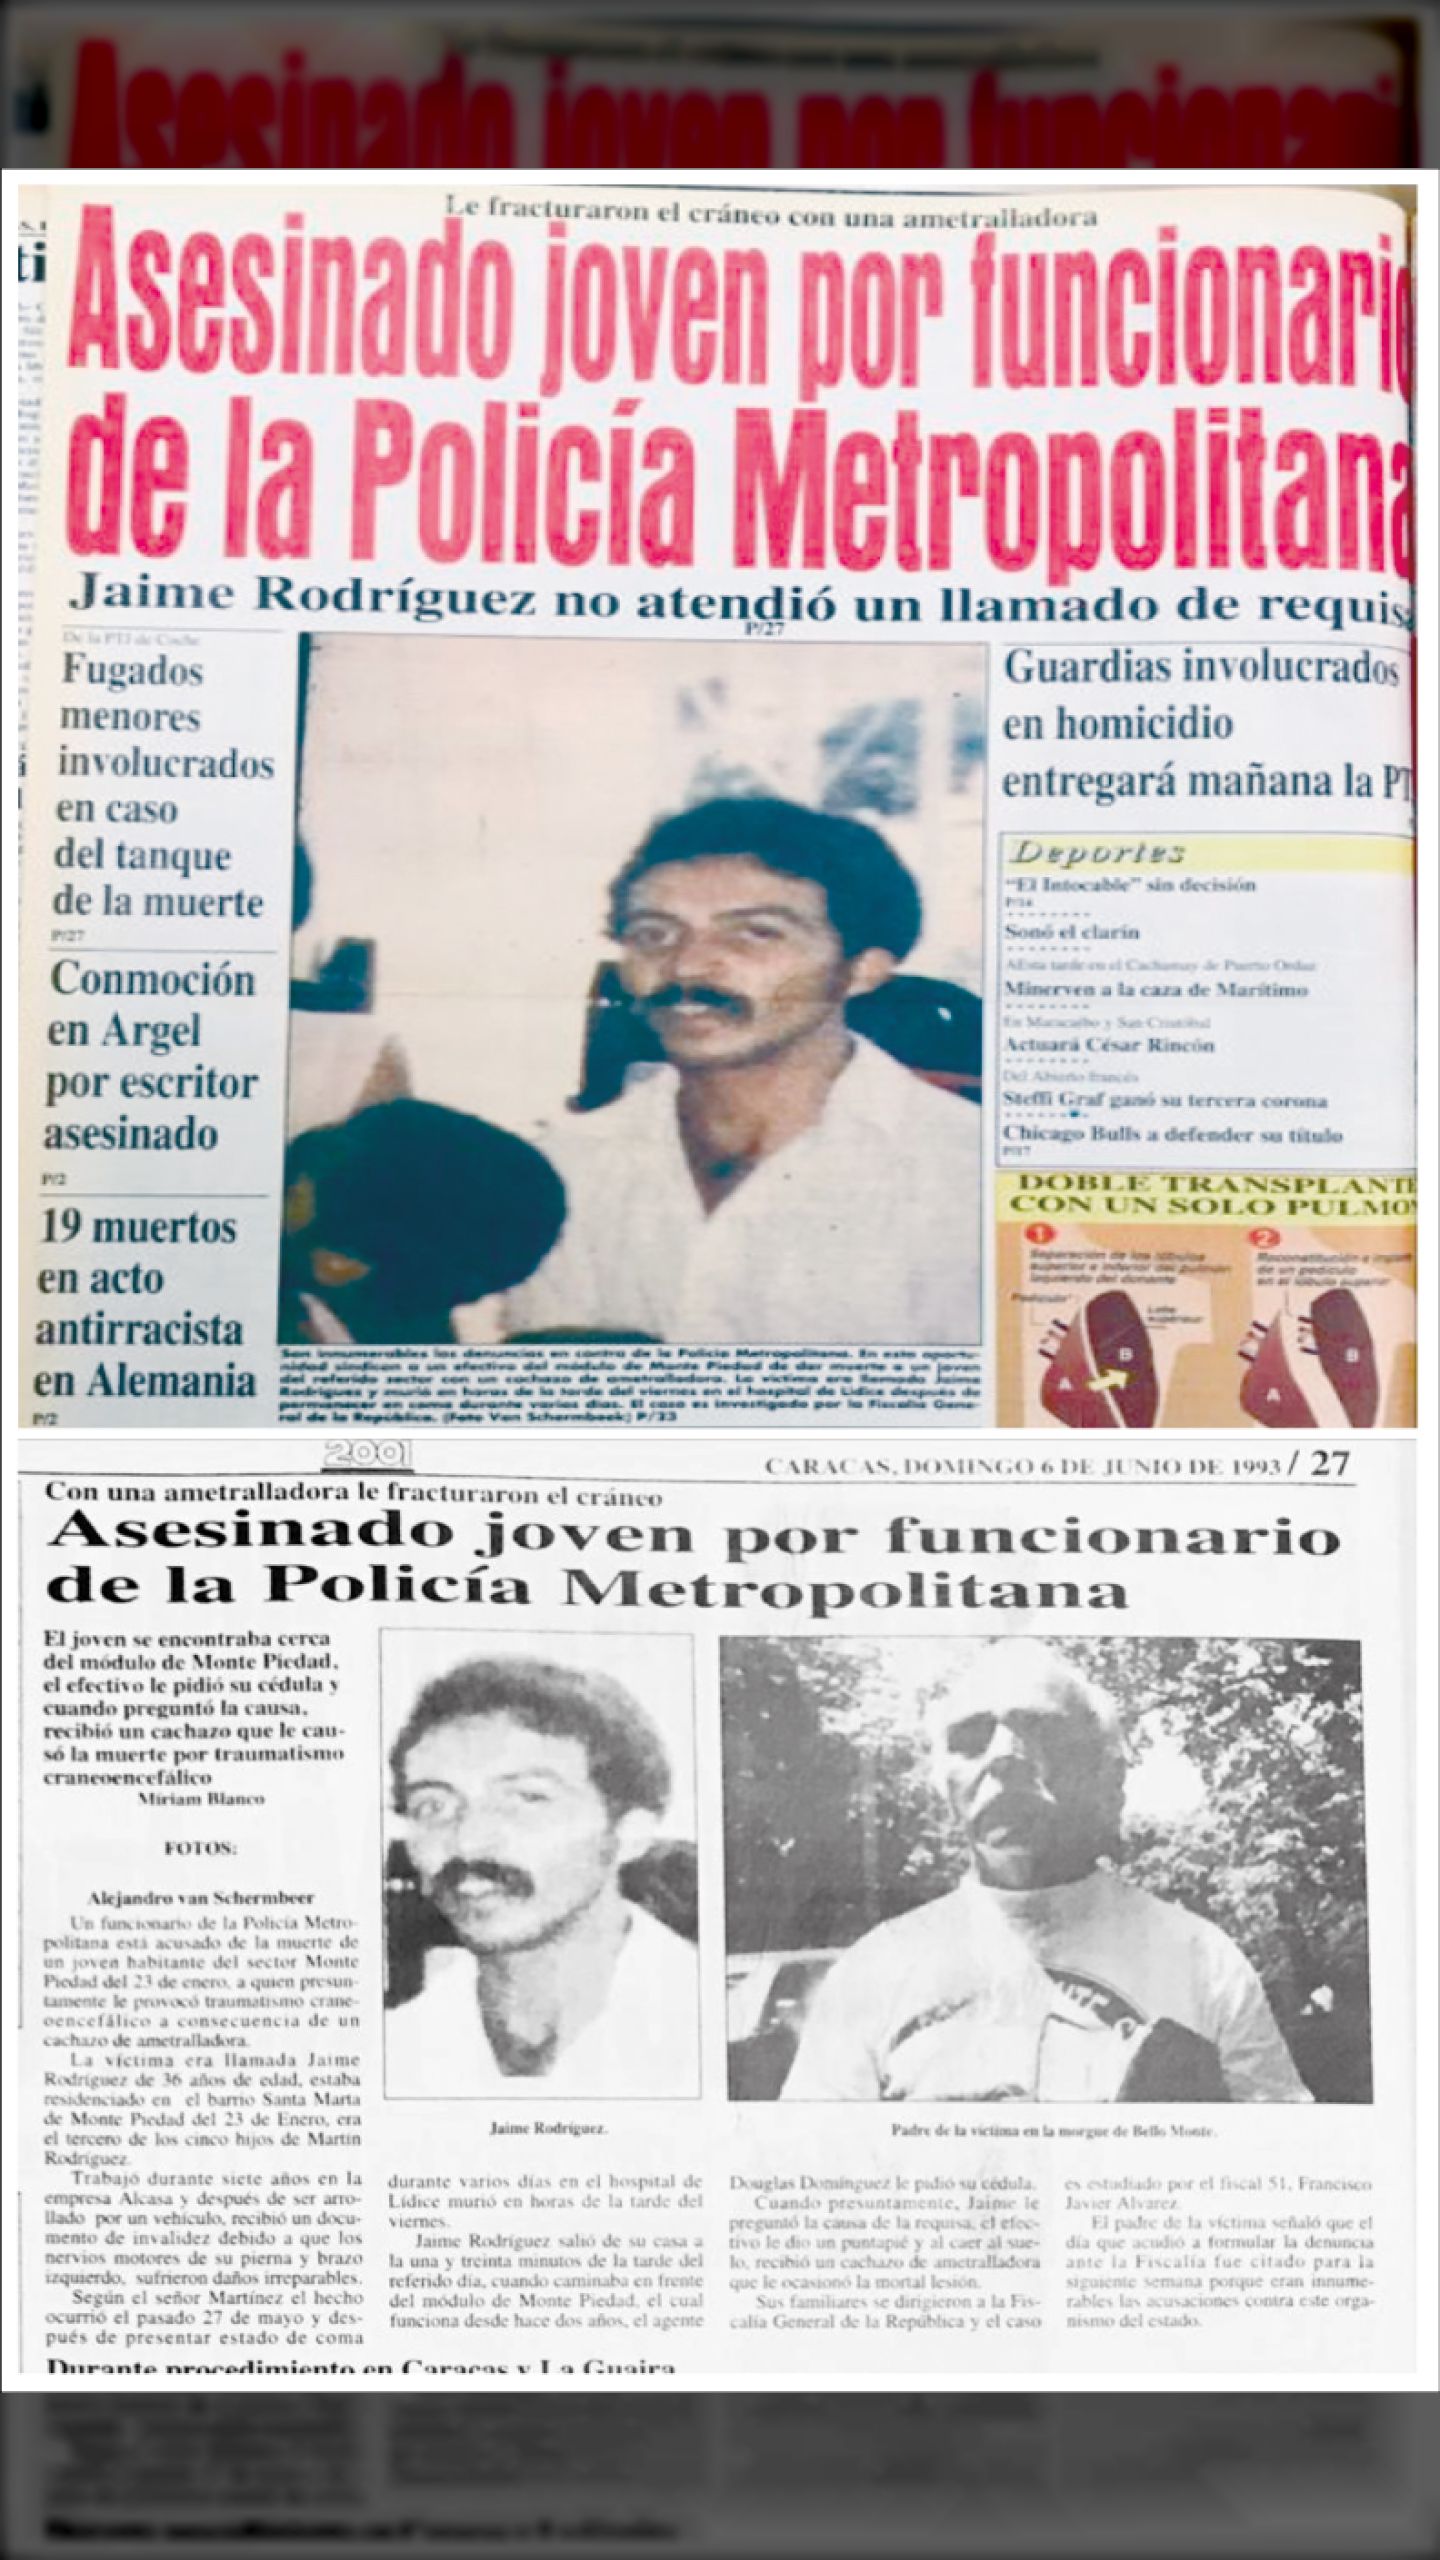 JAIME RODRÍGUEZ: OTRA VÍCTIMA DE LA POLI- LEDEZMA (Diario 2001, 06 de junio 1993)